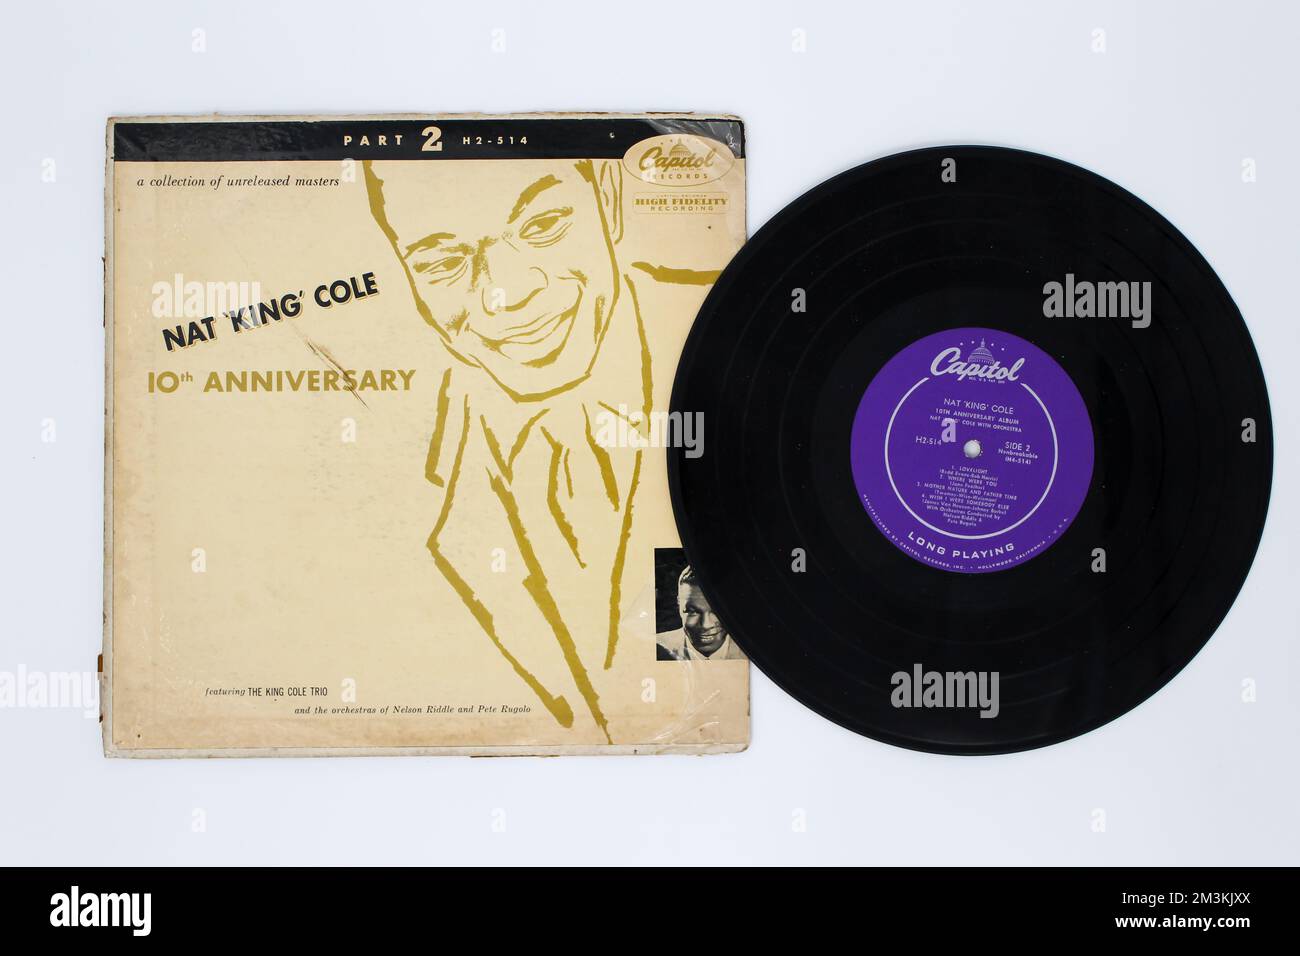 Jazz artist, Nat King Cole music album on vinyl record LP disc. Titled: 10th Anniversary Album. LP album cover Stock Photo